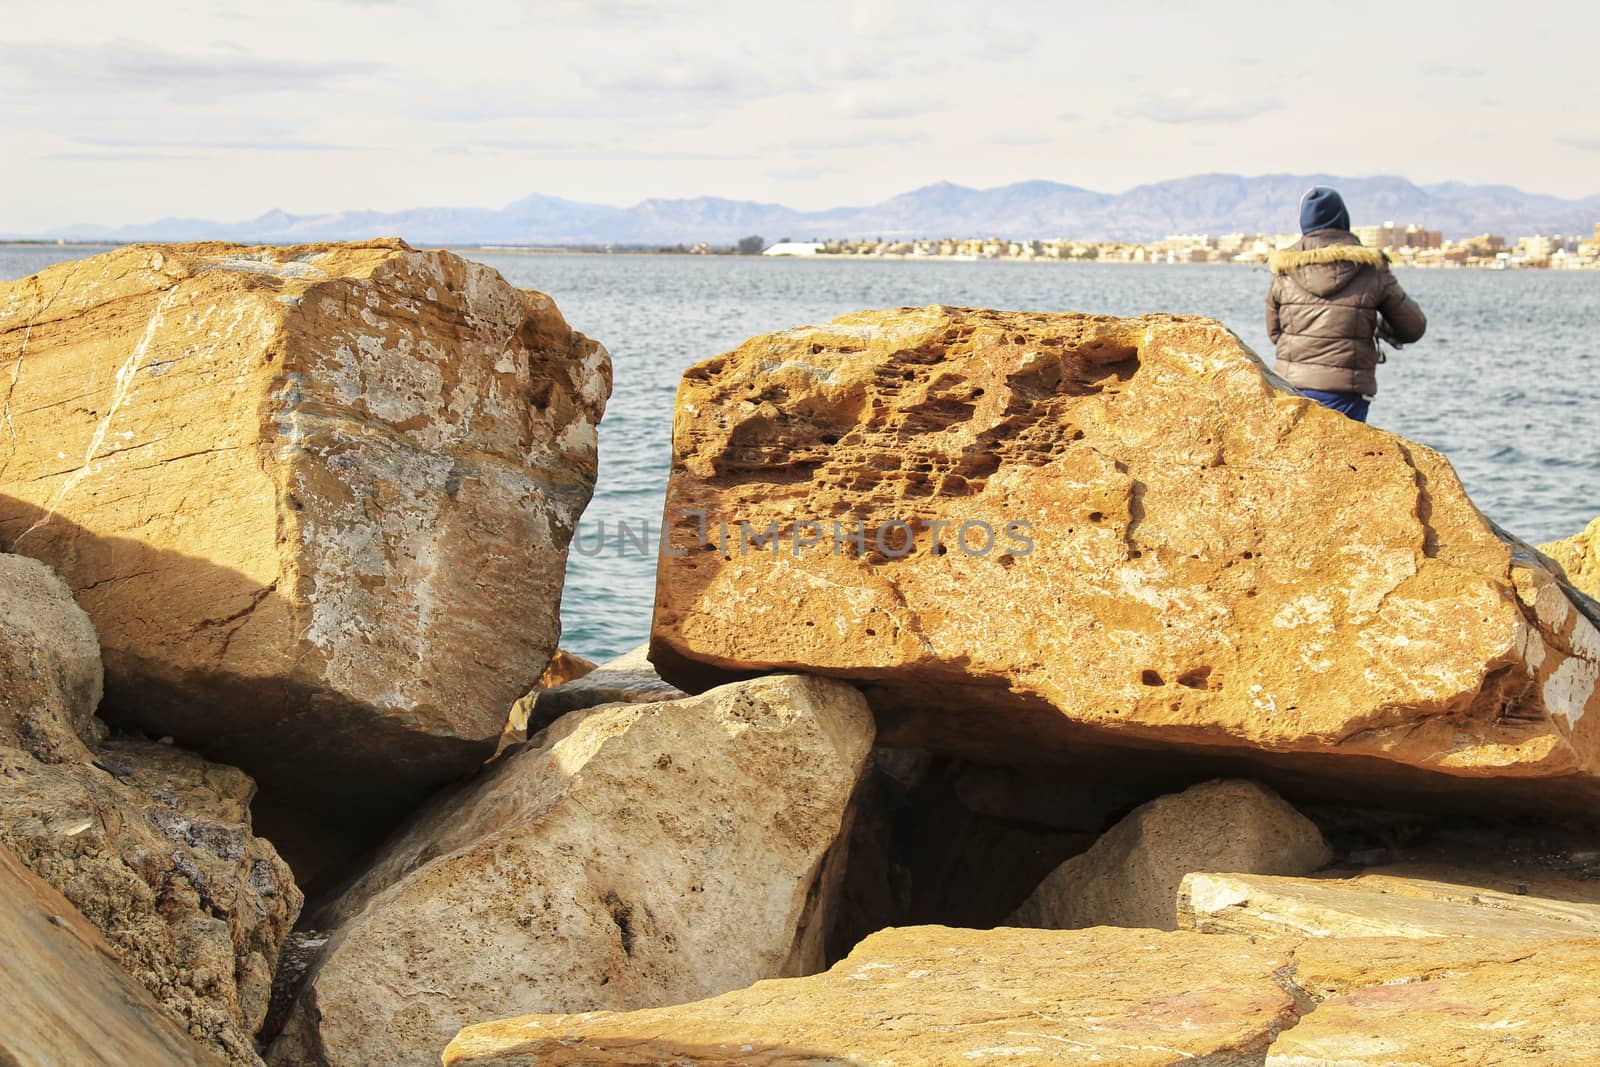 Santa Pola, Spain- December 7, 2017: Man Fishing and relaxing in the dock in a sunny day in Santa Pola, Alicante